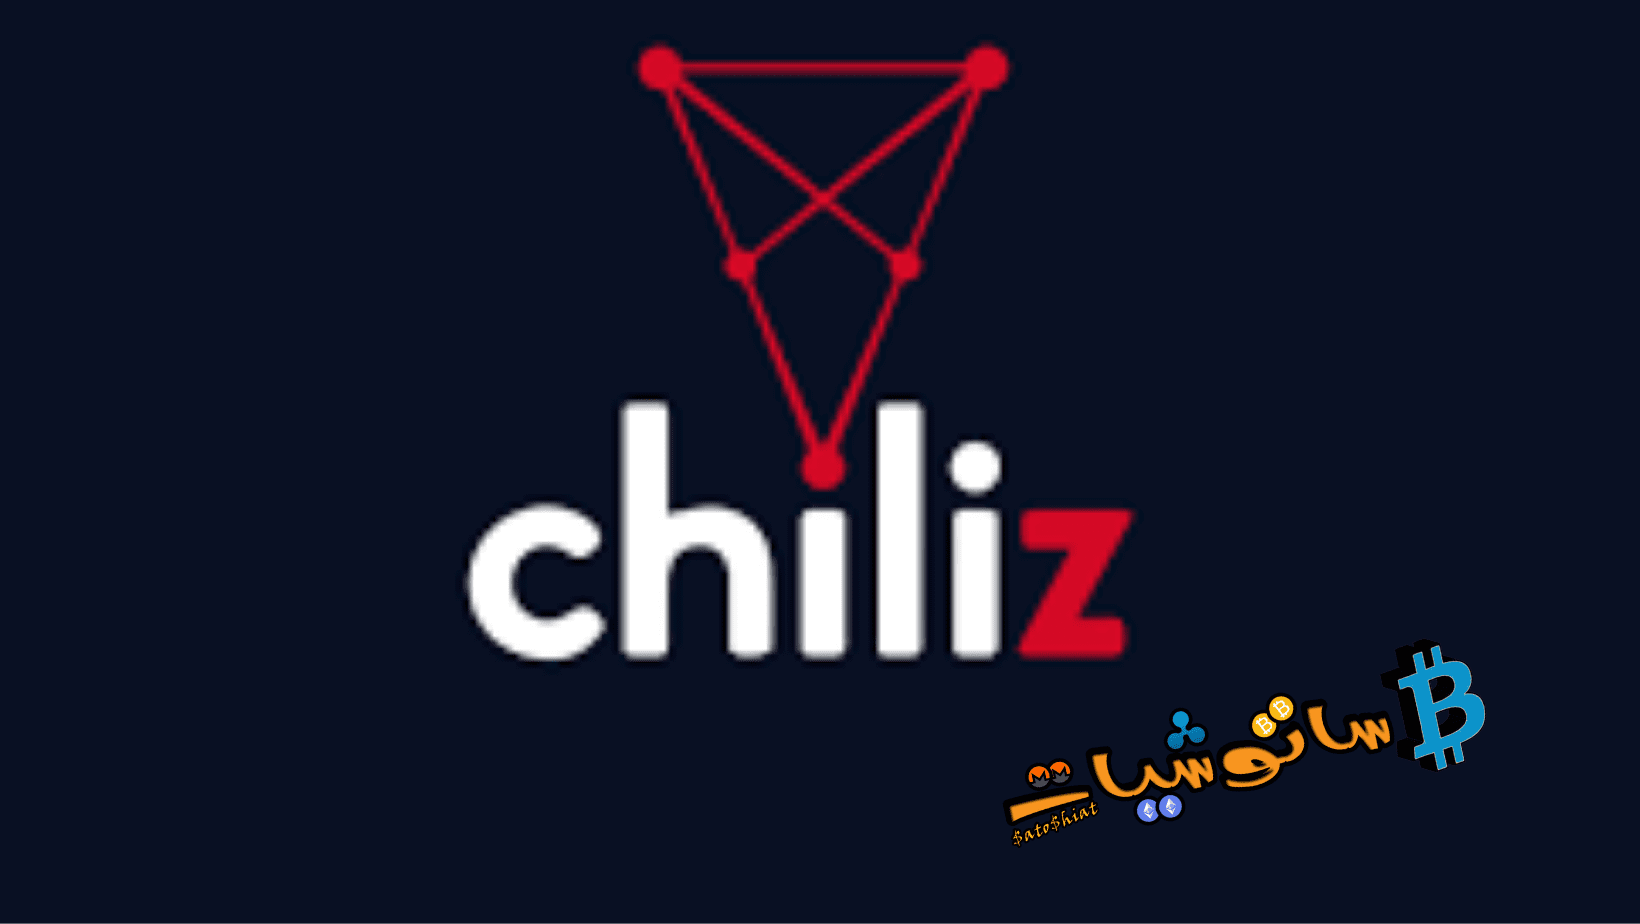 Chiliz (CHZ)